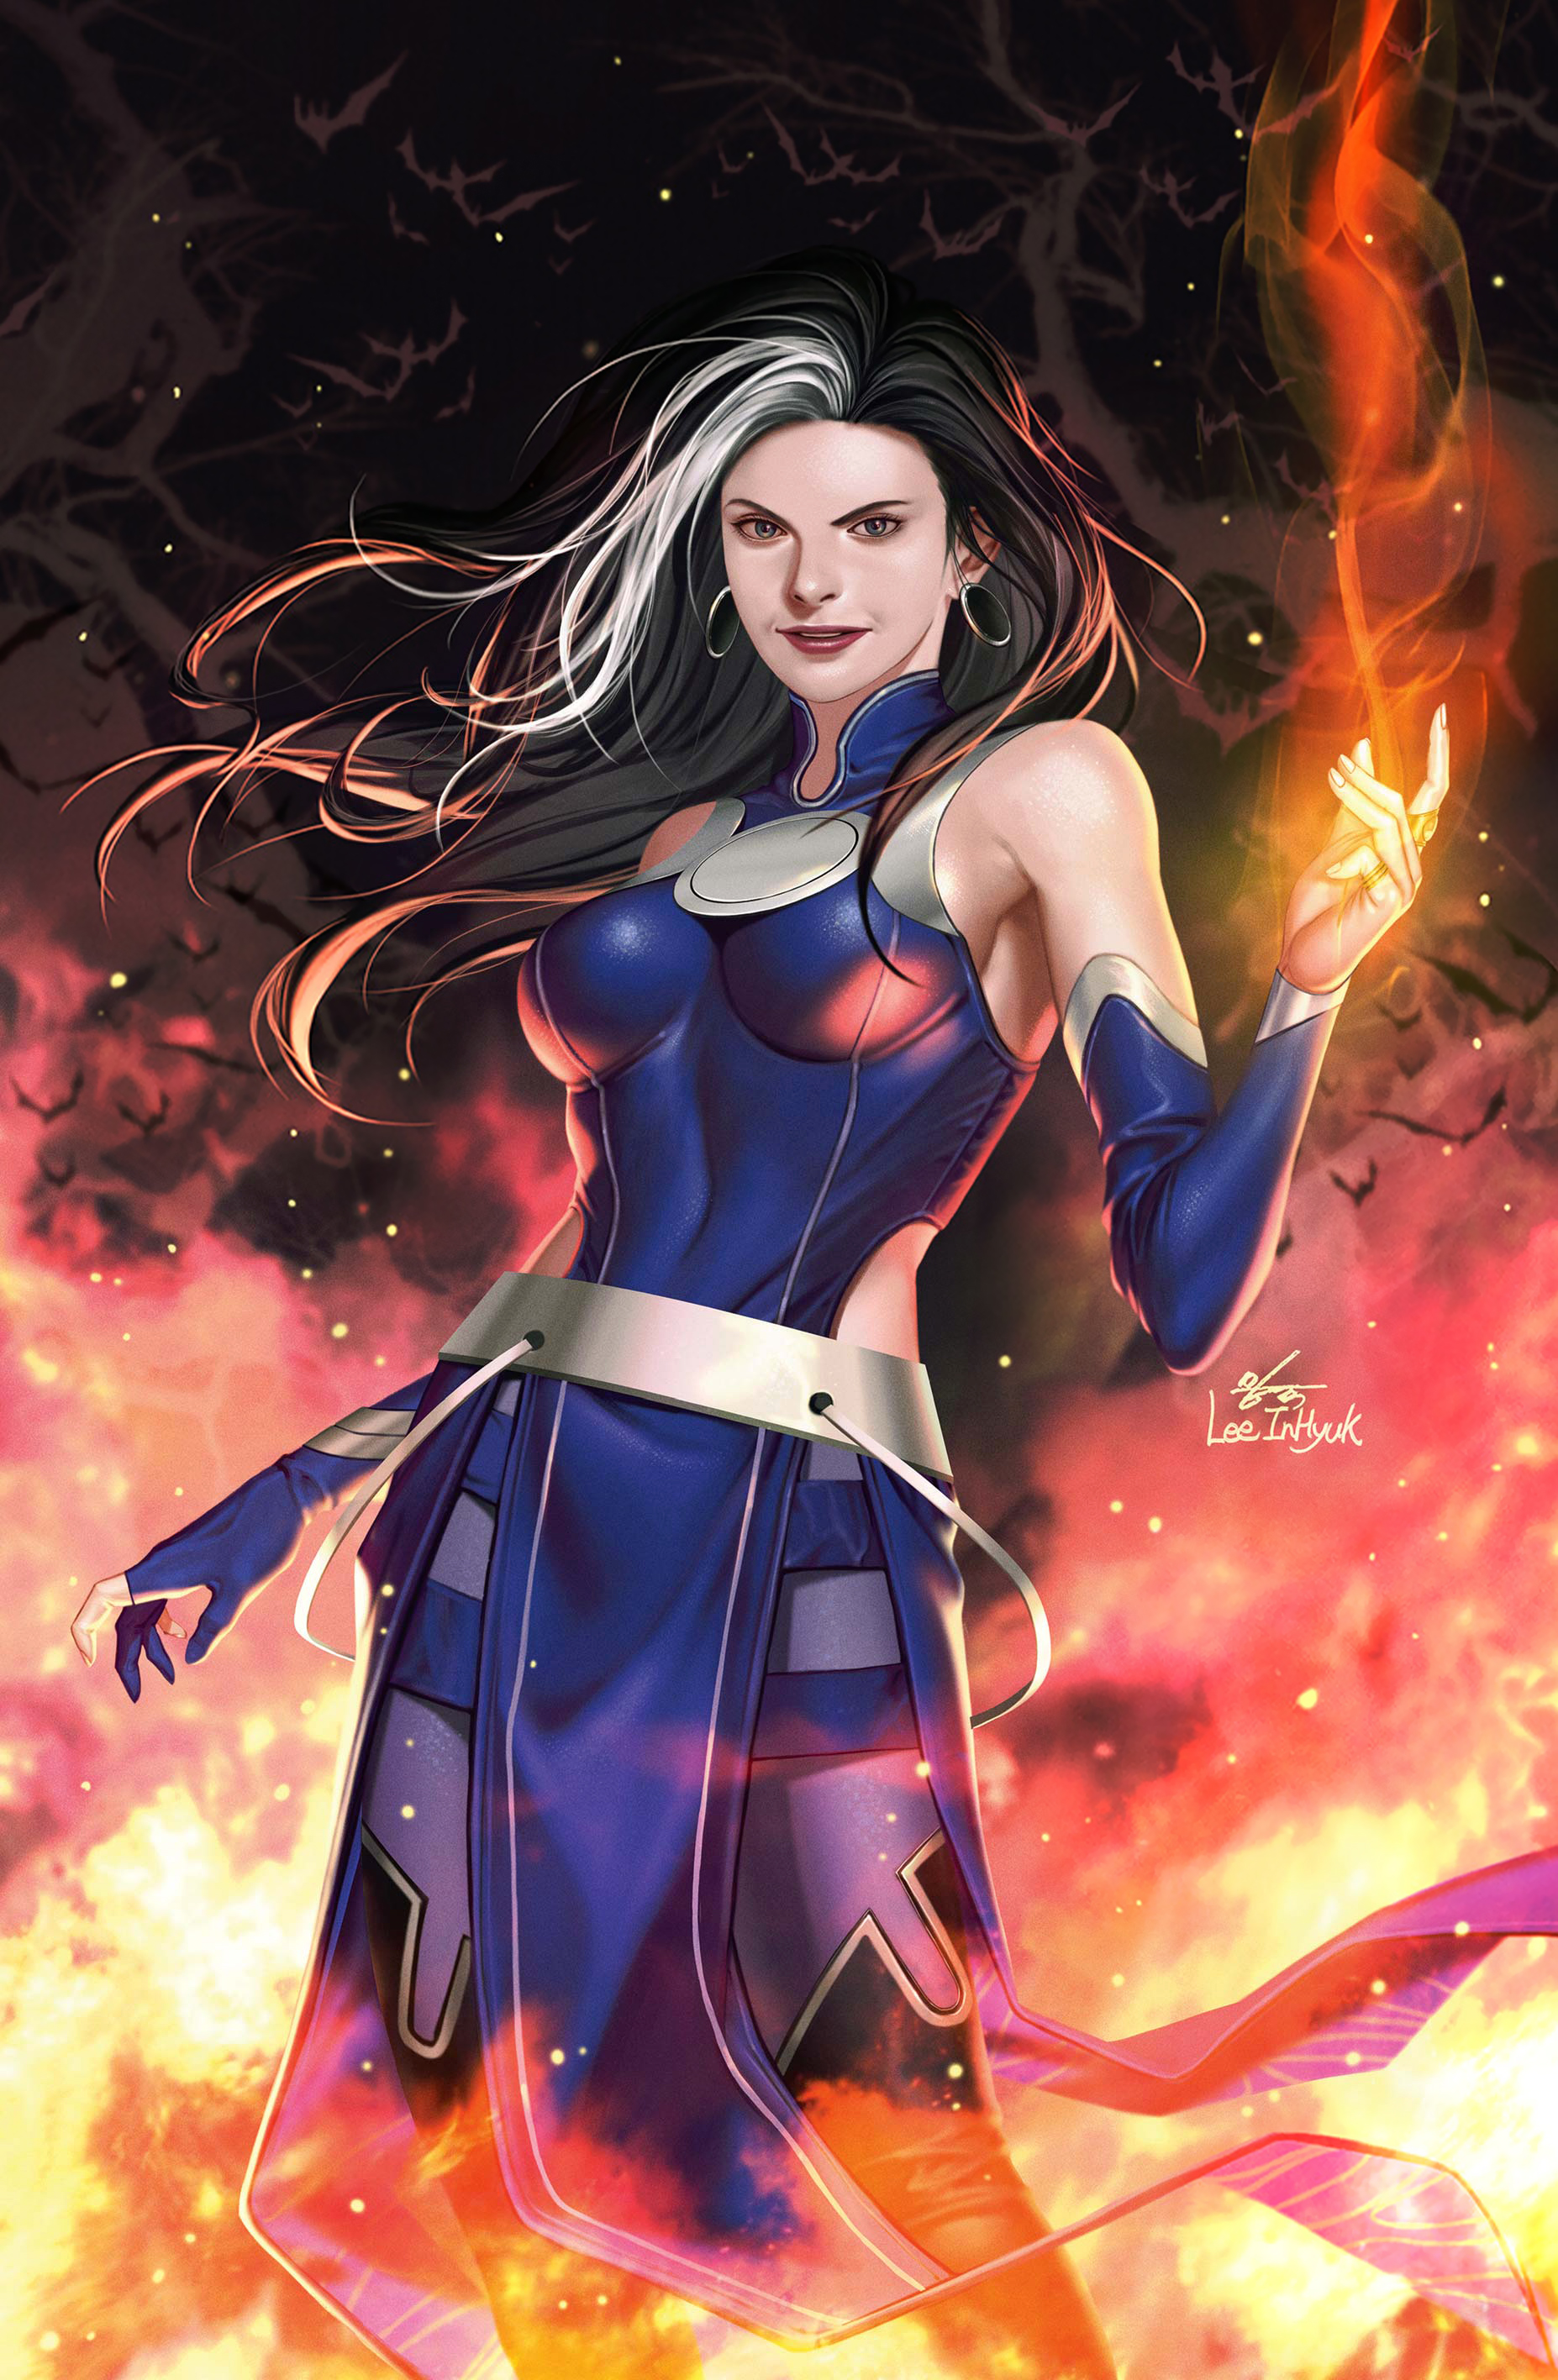 Wanda Maximoff as Scarlet Witch (Earth-616) - Marvel Comics